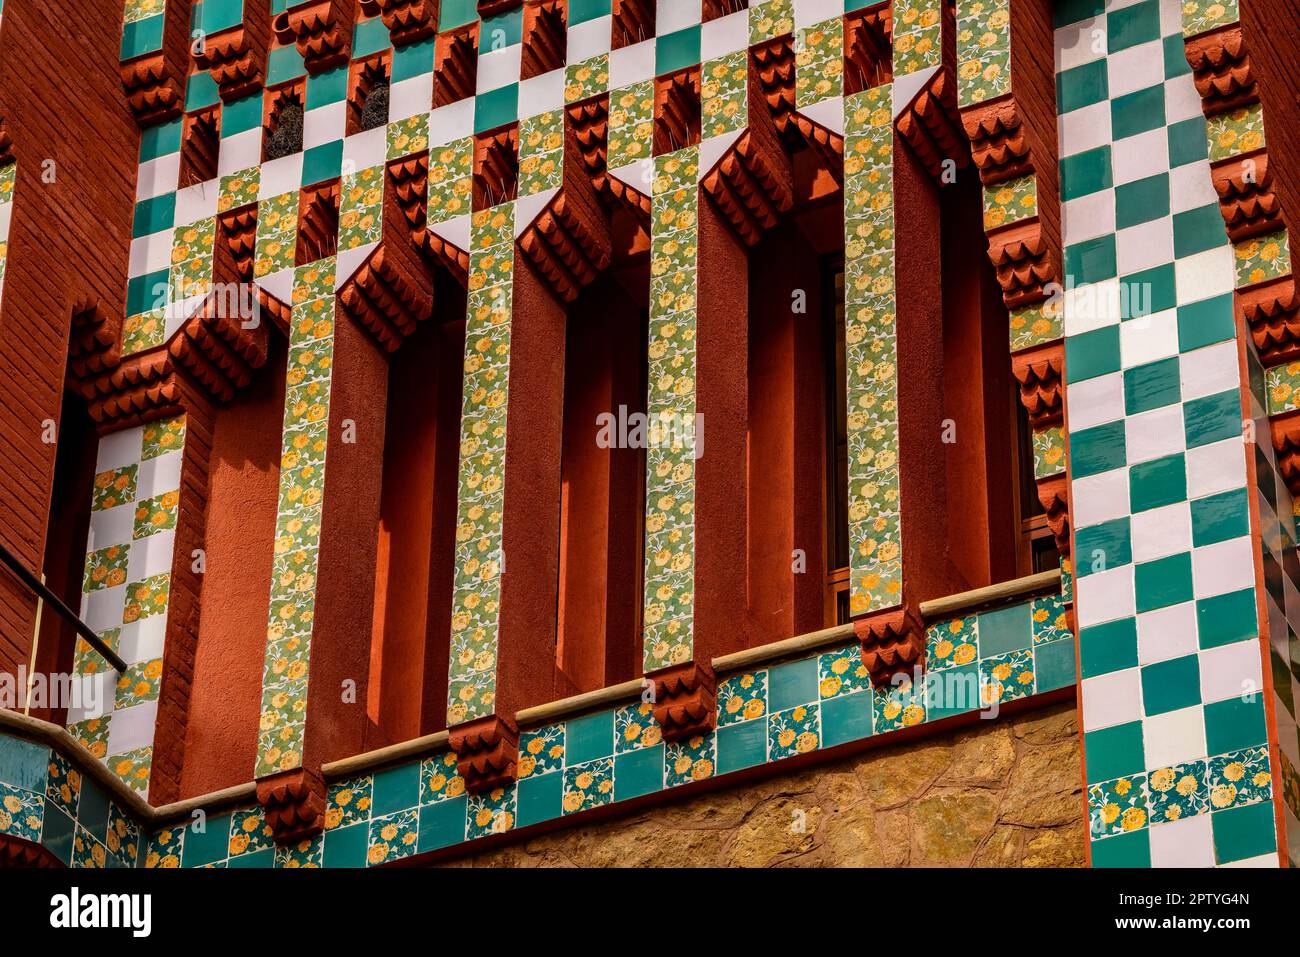 Dettagli della facciata della Casa Vicens, disegnata da Antoni Gaudí (Barcellona, Catalogna, Spagna) ESP: Detalles de la fachada de Casa Vicens BCN España Foto Stock